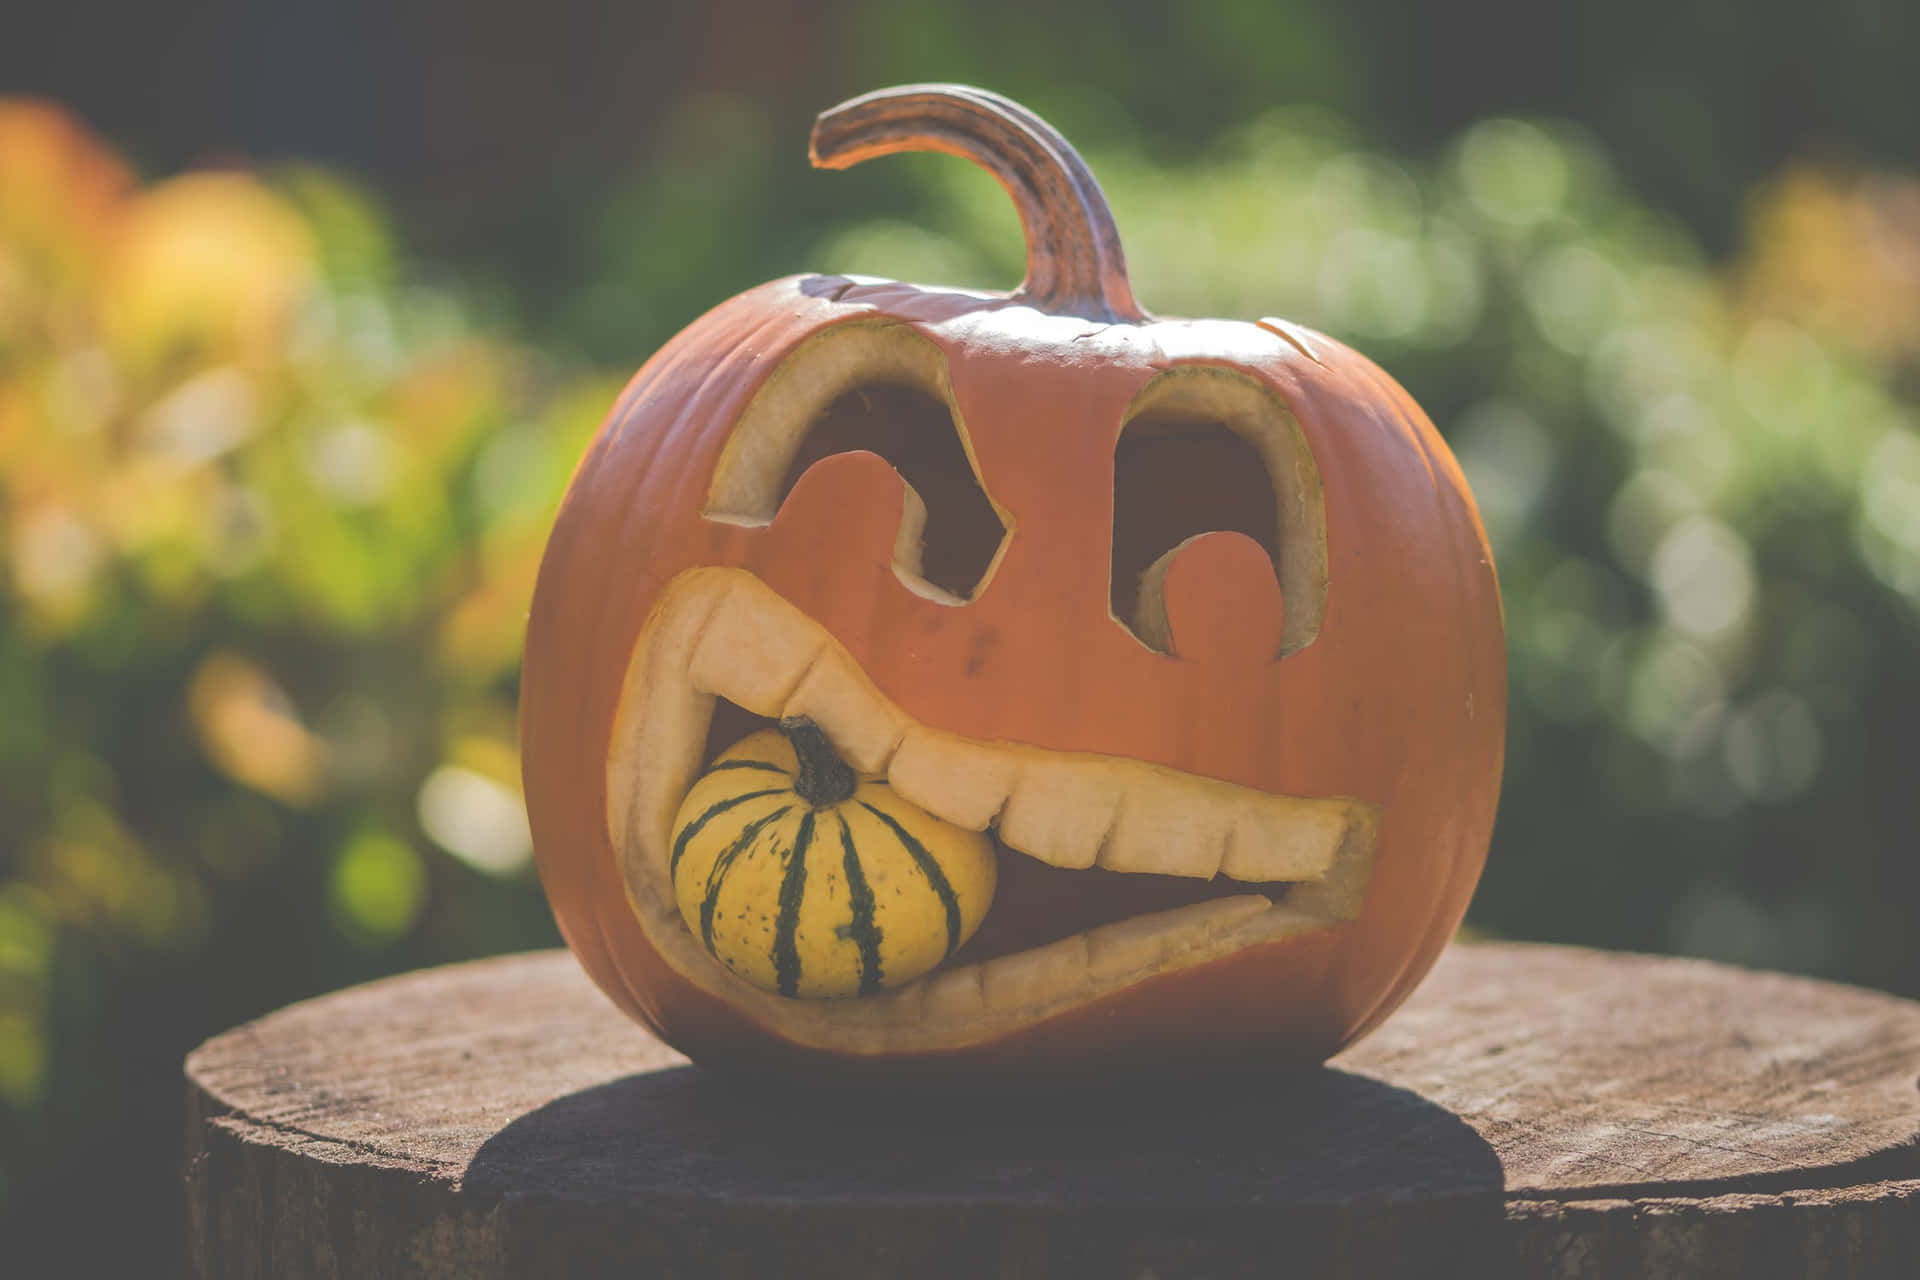 A Warm Image of a Happy Pumpkin